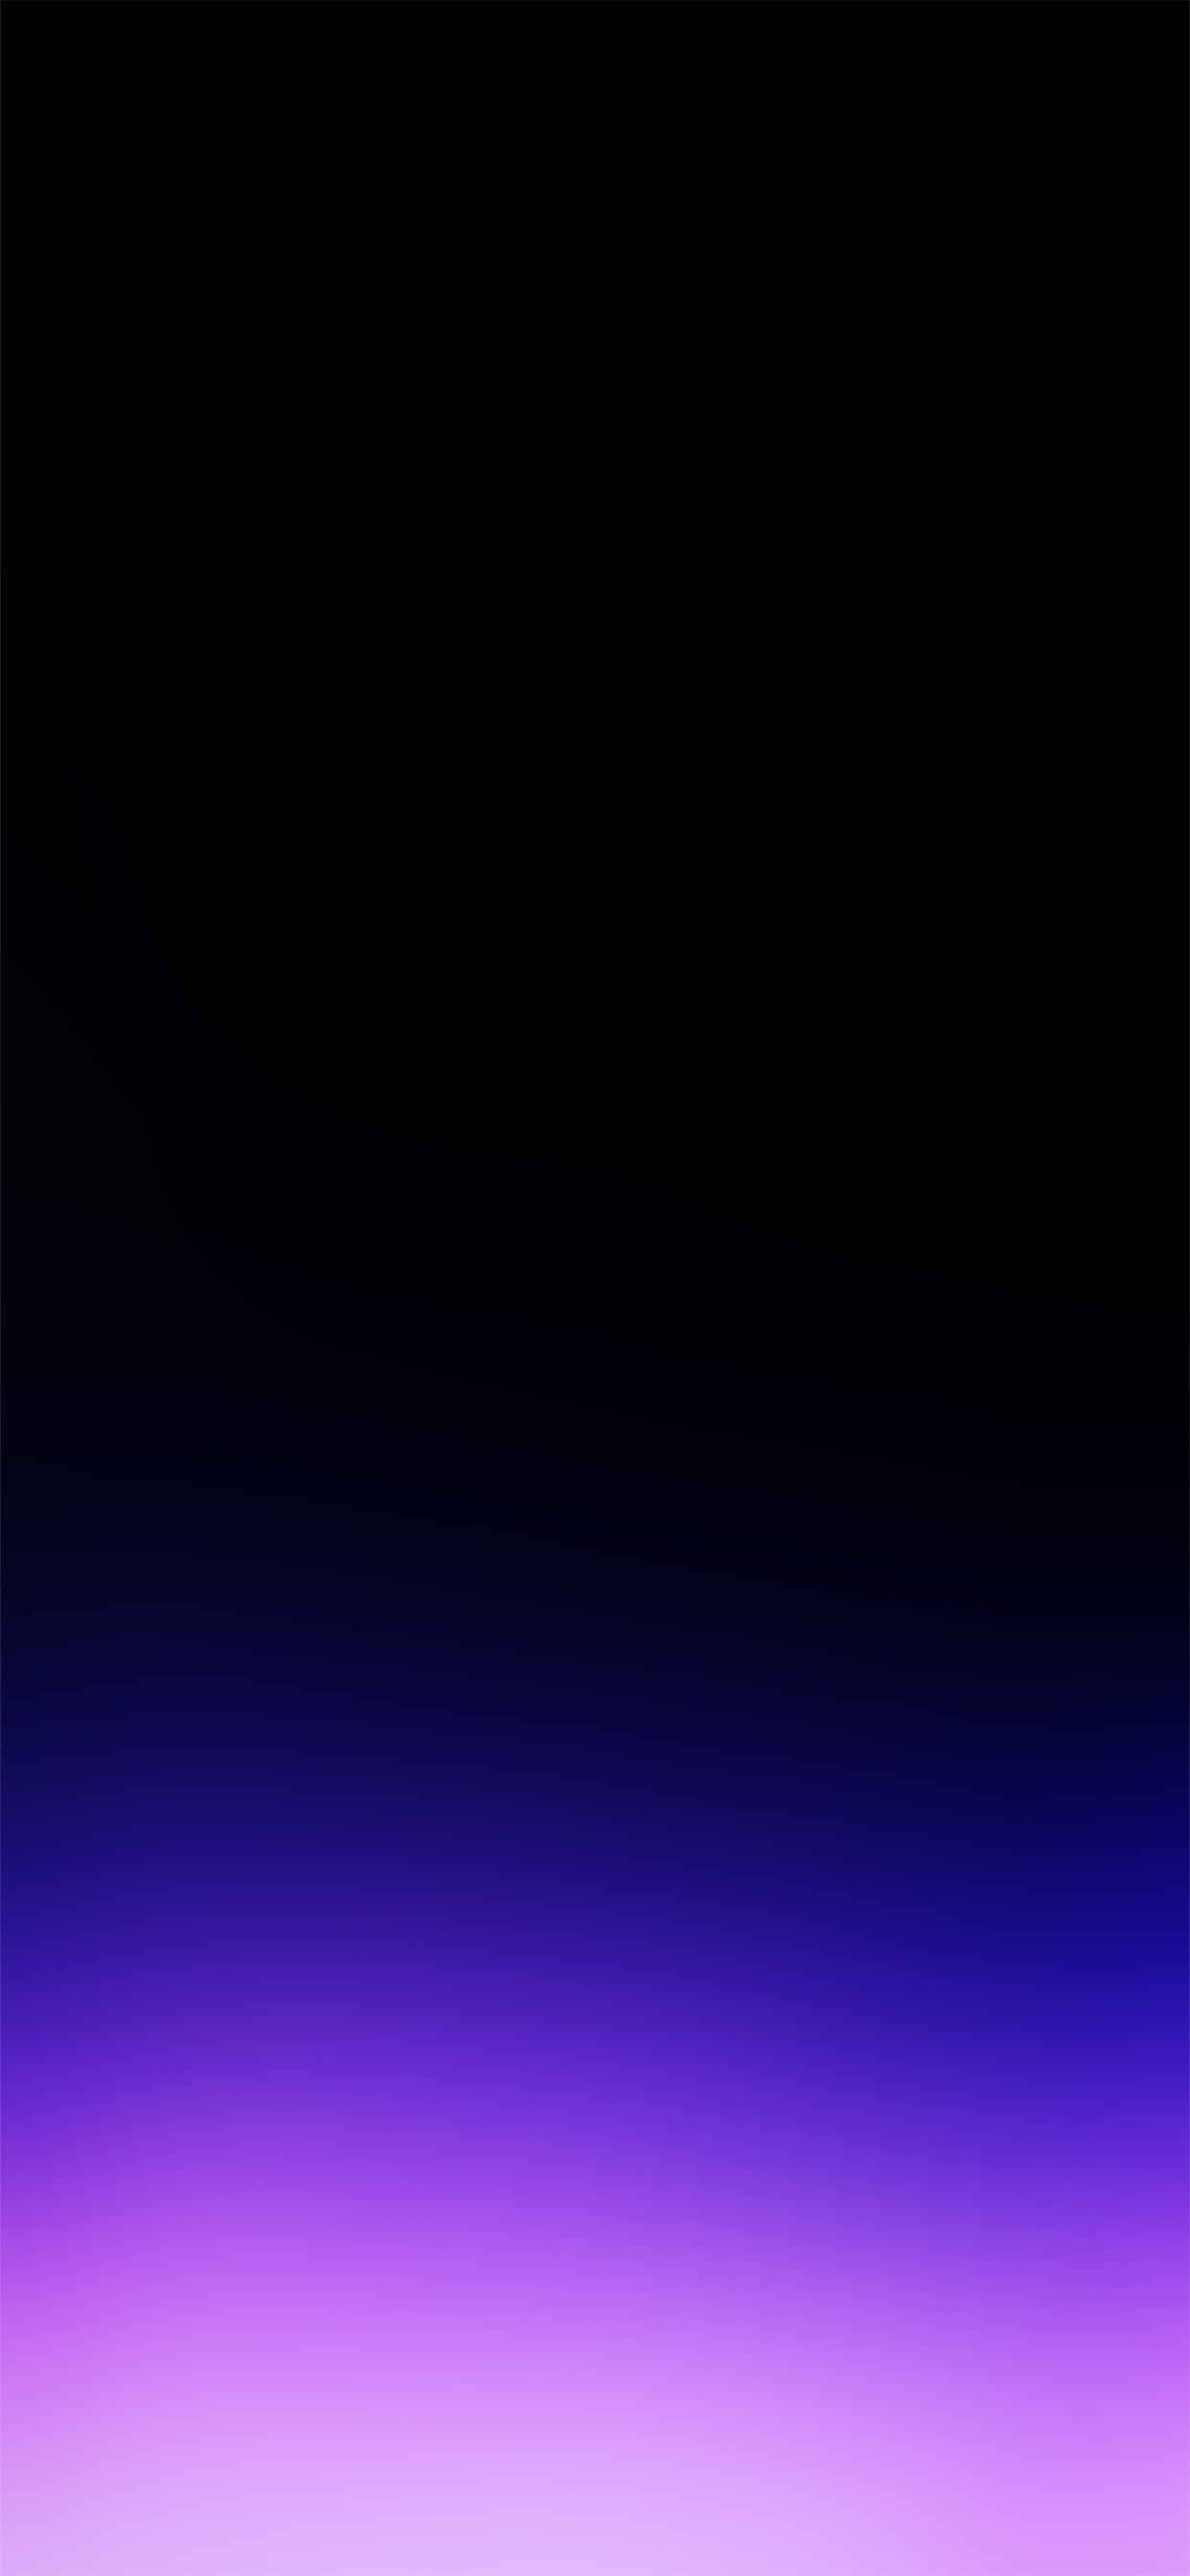 1242x2688 purpletrue black gradient wallpaper iphone ar72014